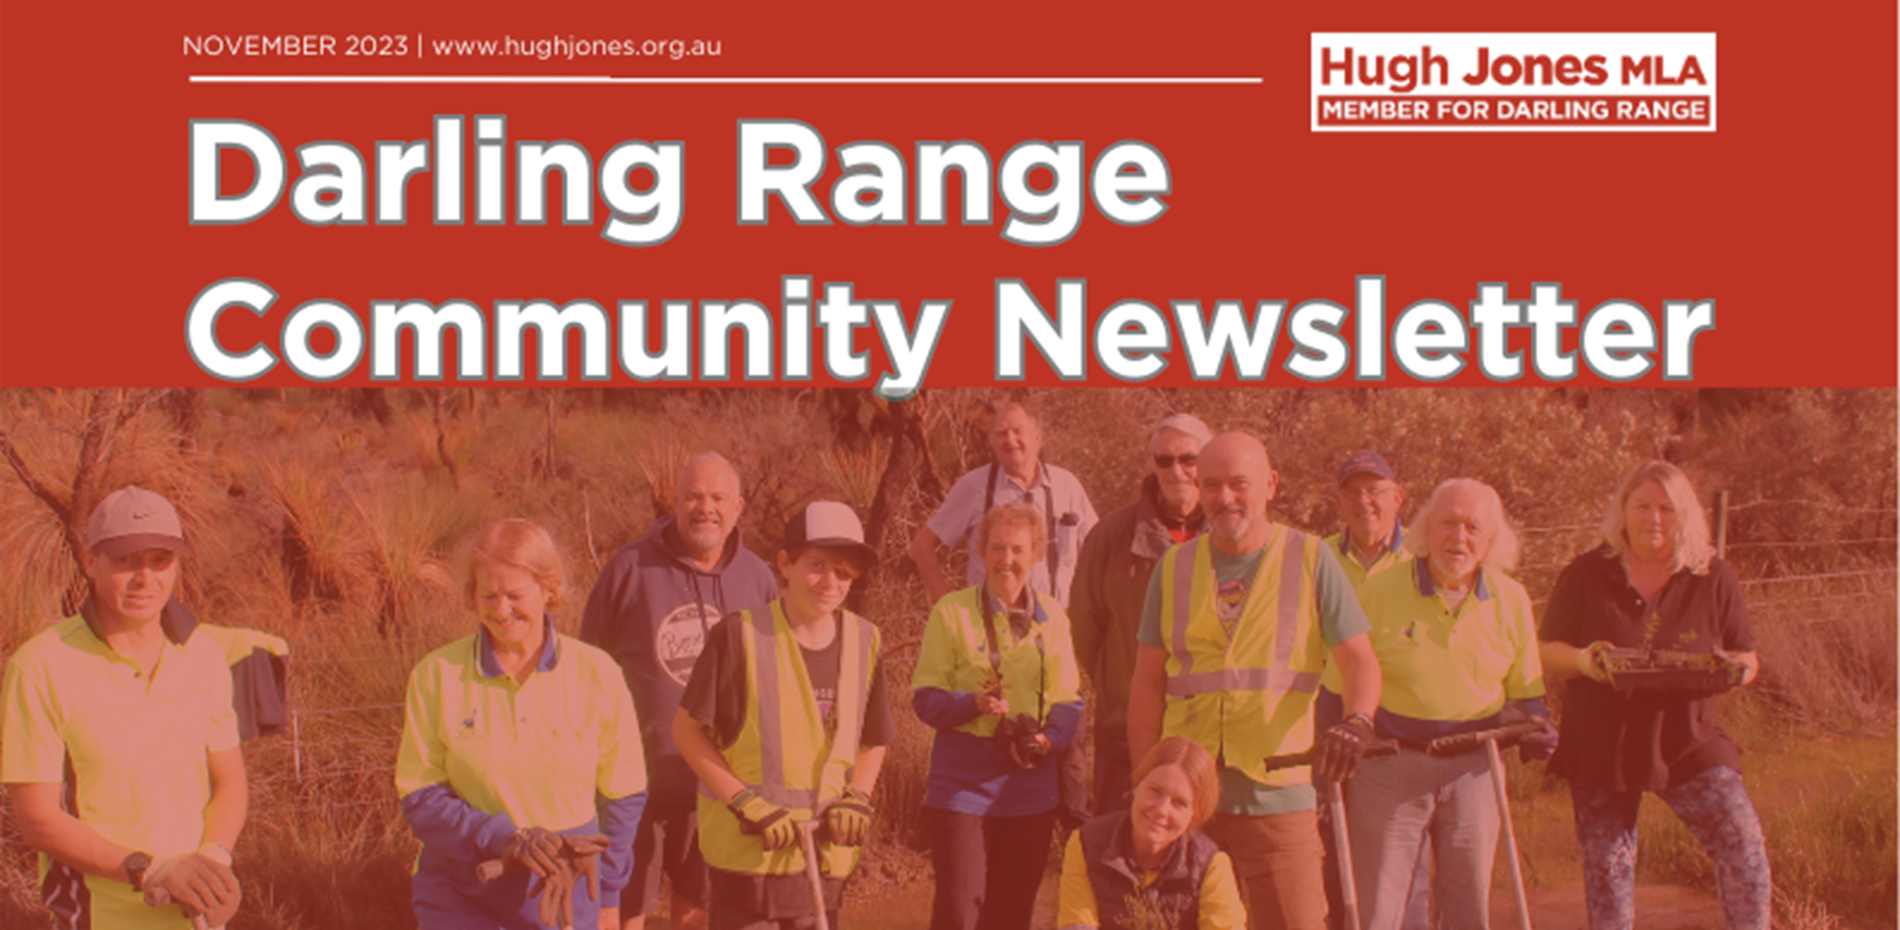 Darling Range Community Newsletter Main Image